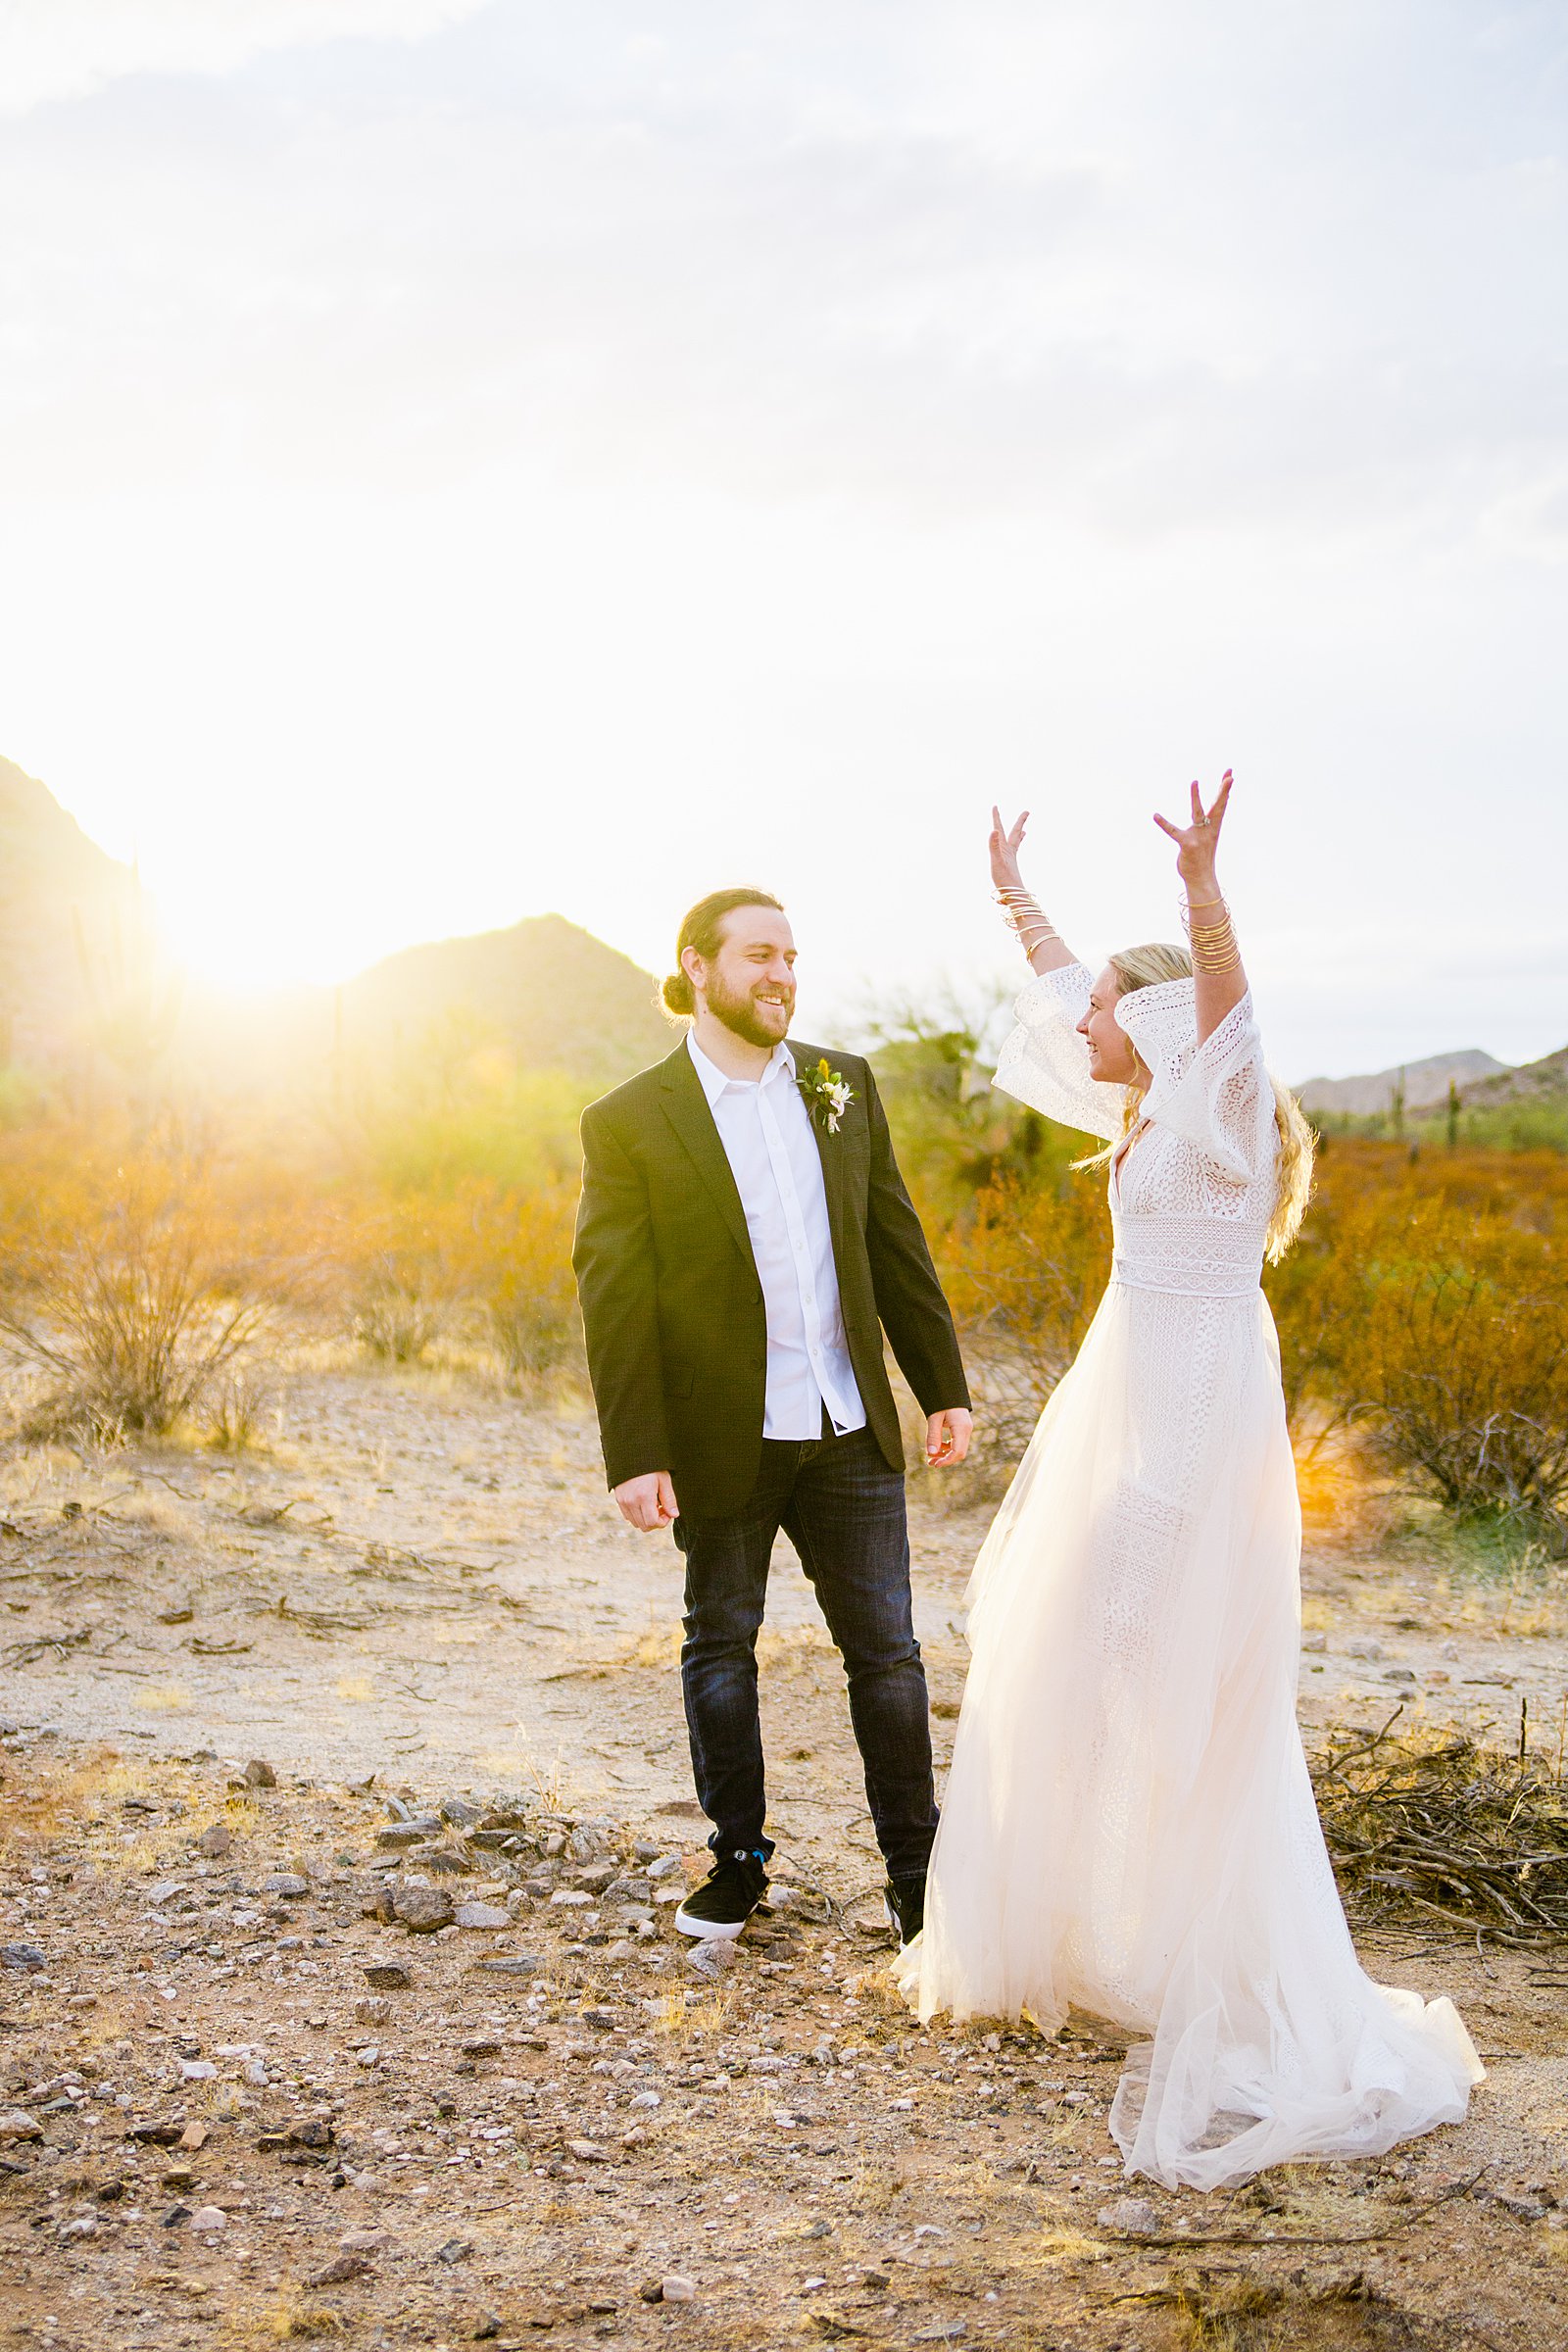 Bride and Groom dancingtogether during their San Tan Regional Park wedding by Arizona wedding photographer PMA Photography.